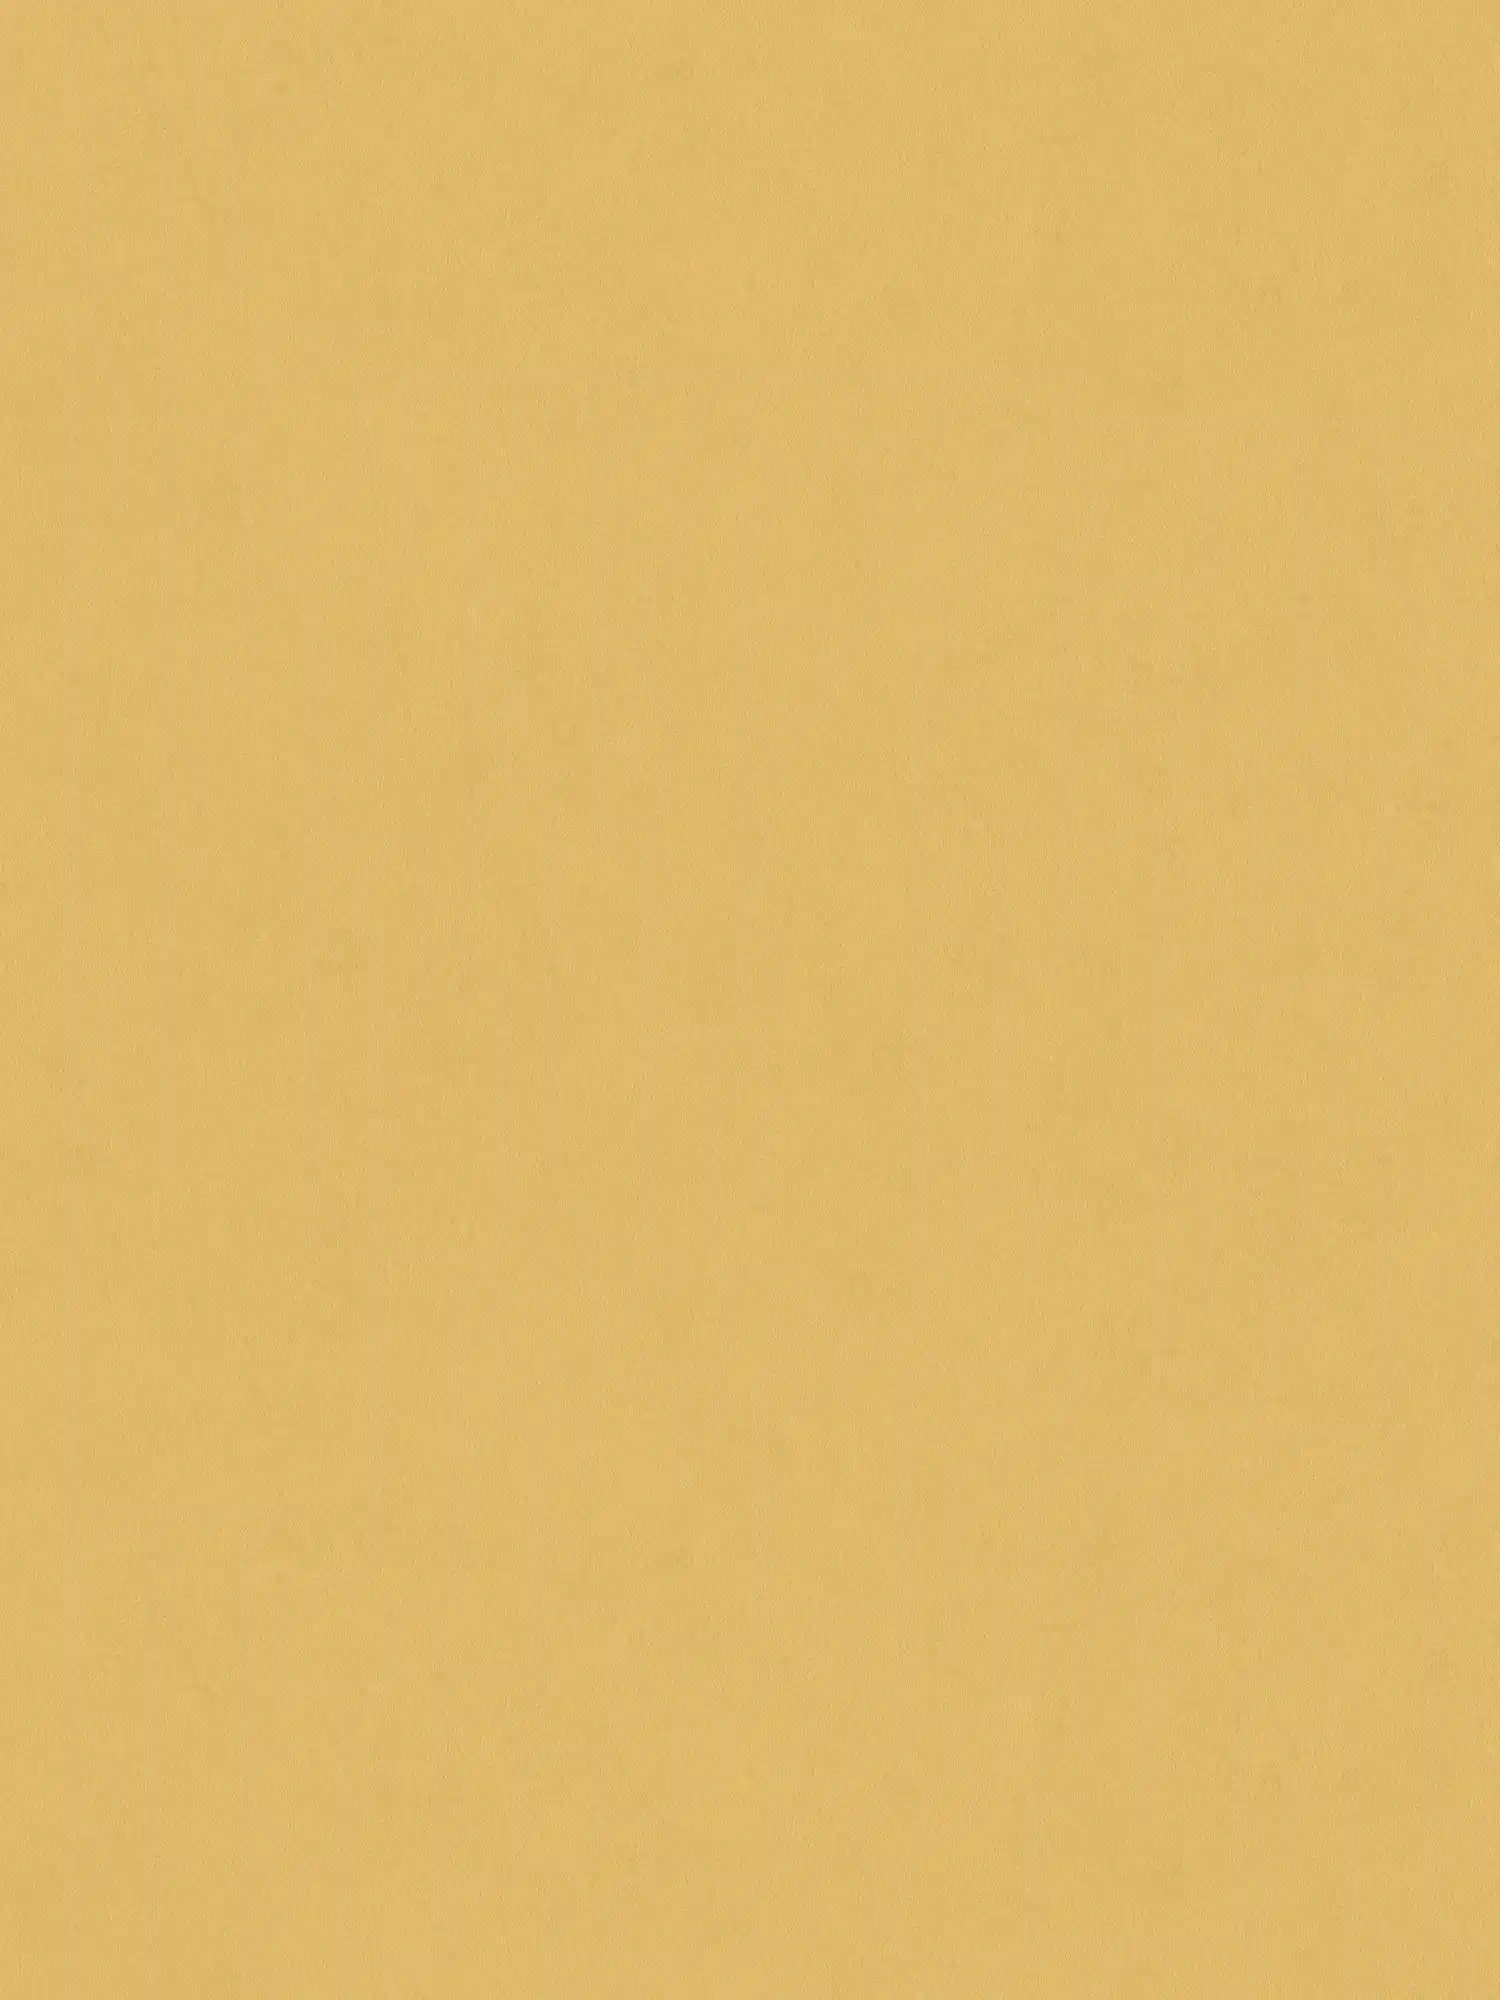 Plain wallpaper in plaster look - yellow
